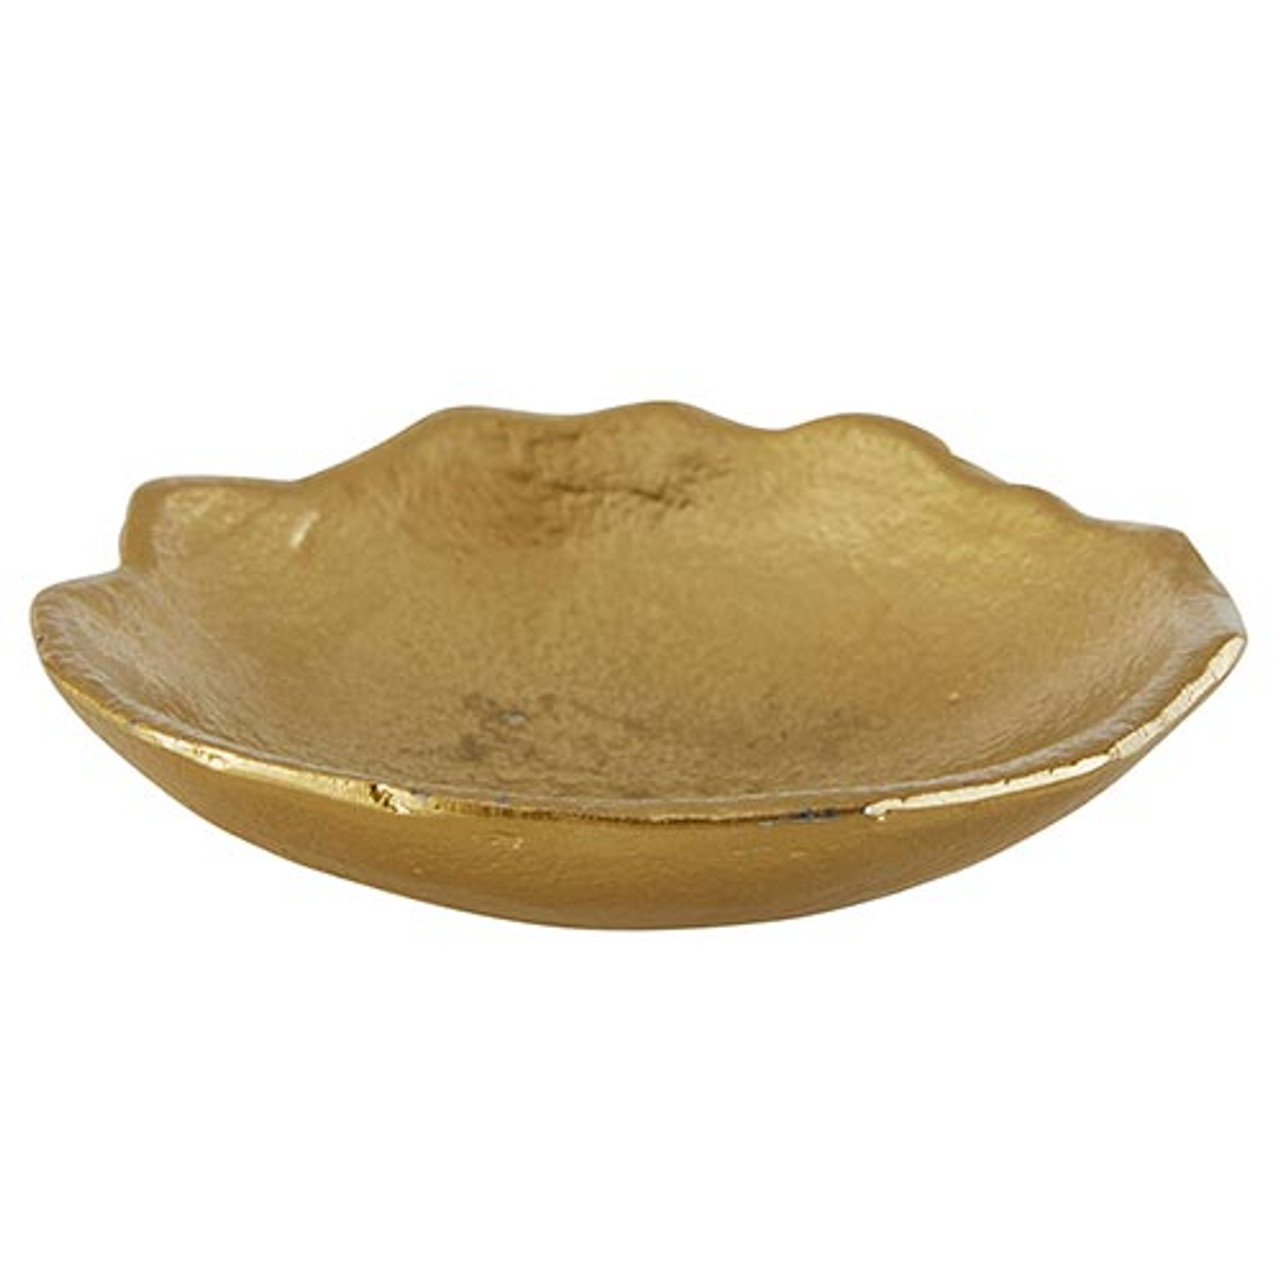 Golden Trinket Dish - Large - [Consumer]47th & Main